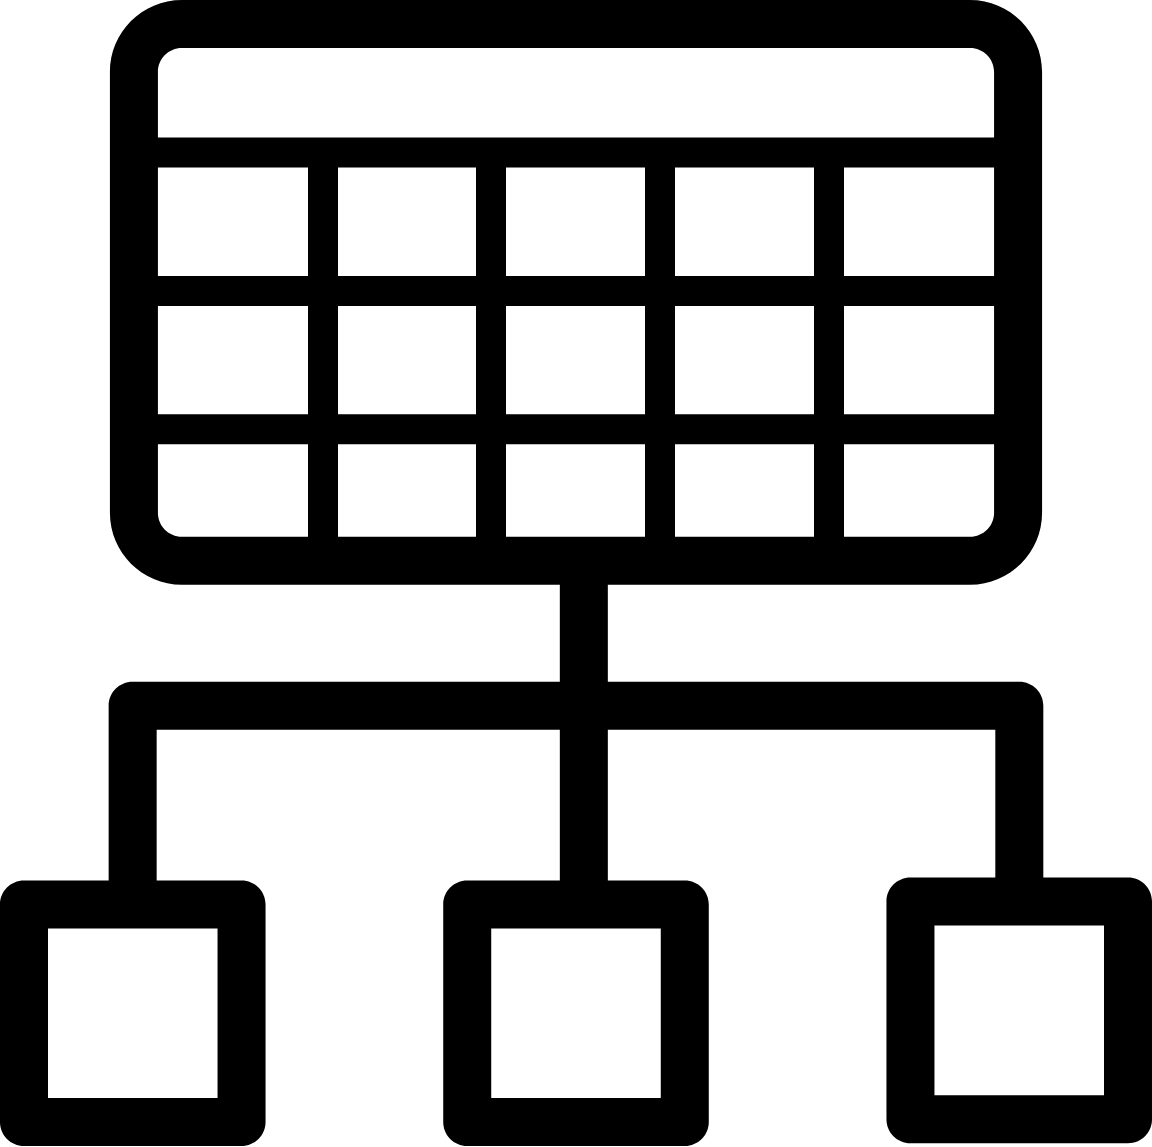 Units logo